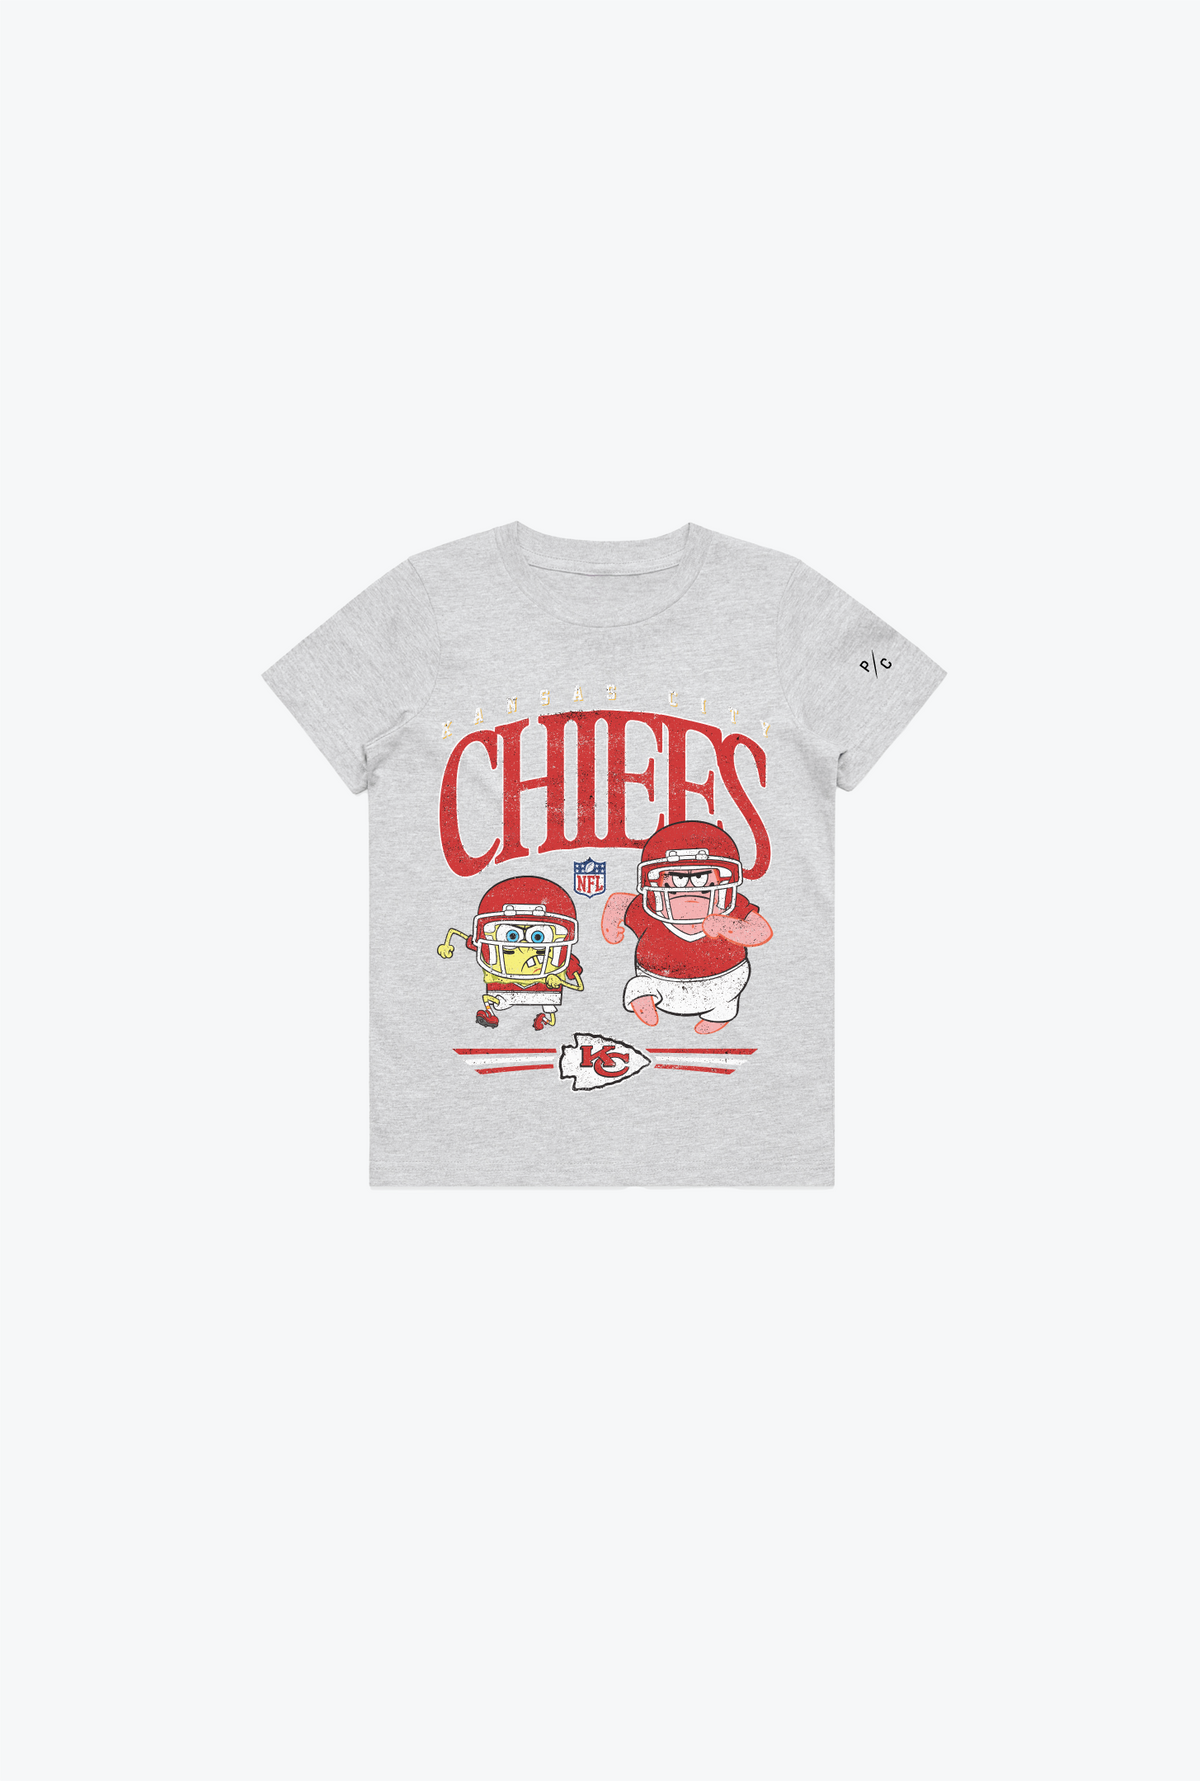 Spongebob & Patrick Rush Kids T-Shirt - Kansas City Chiefs